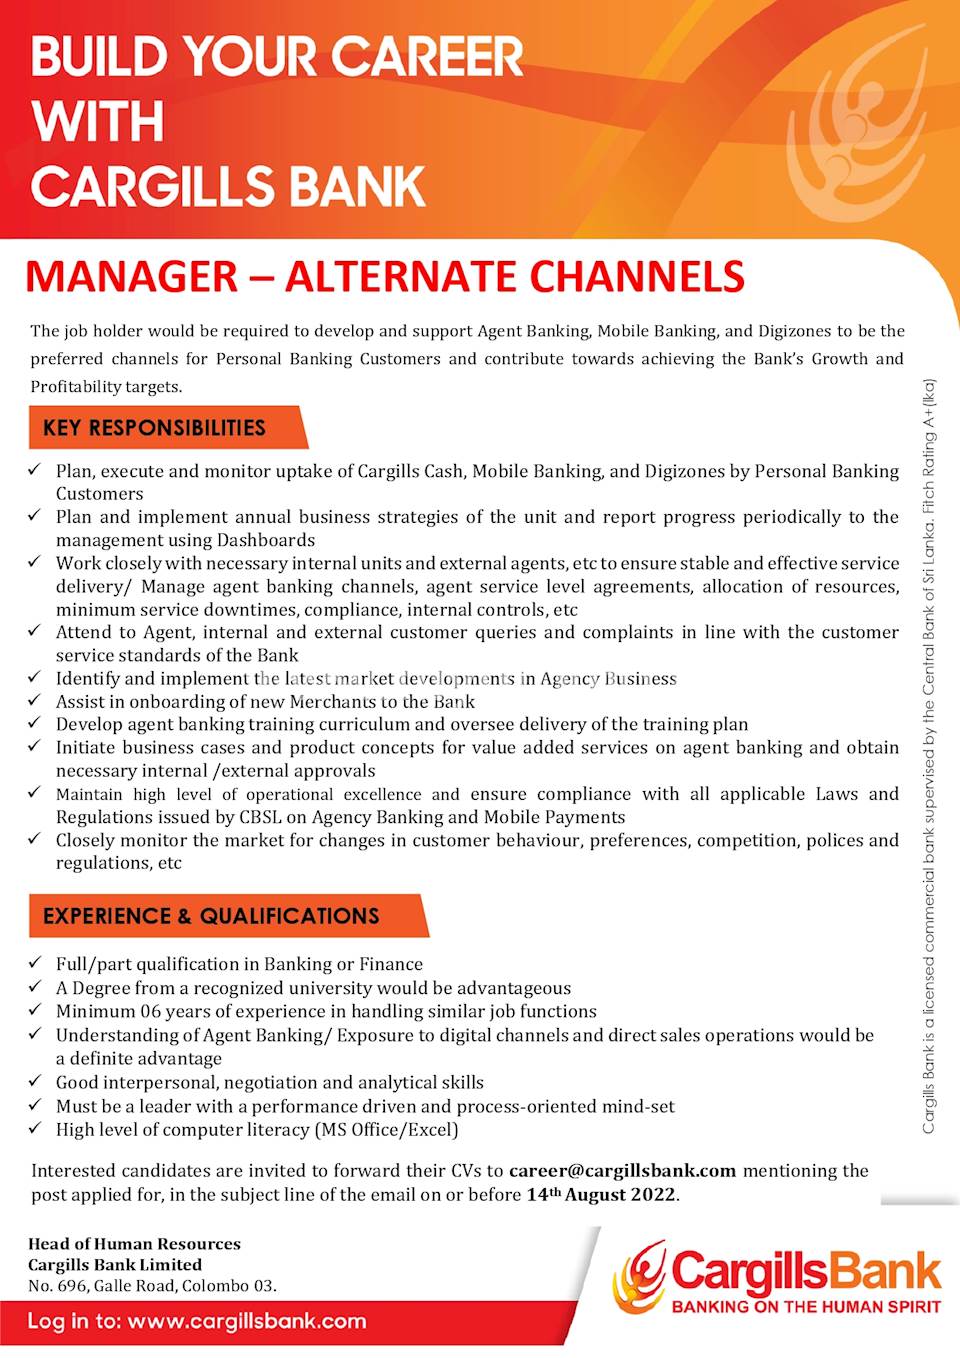 Manager - Alternate Channels